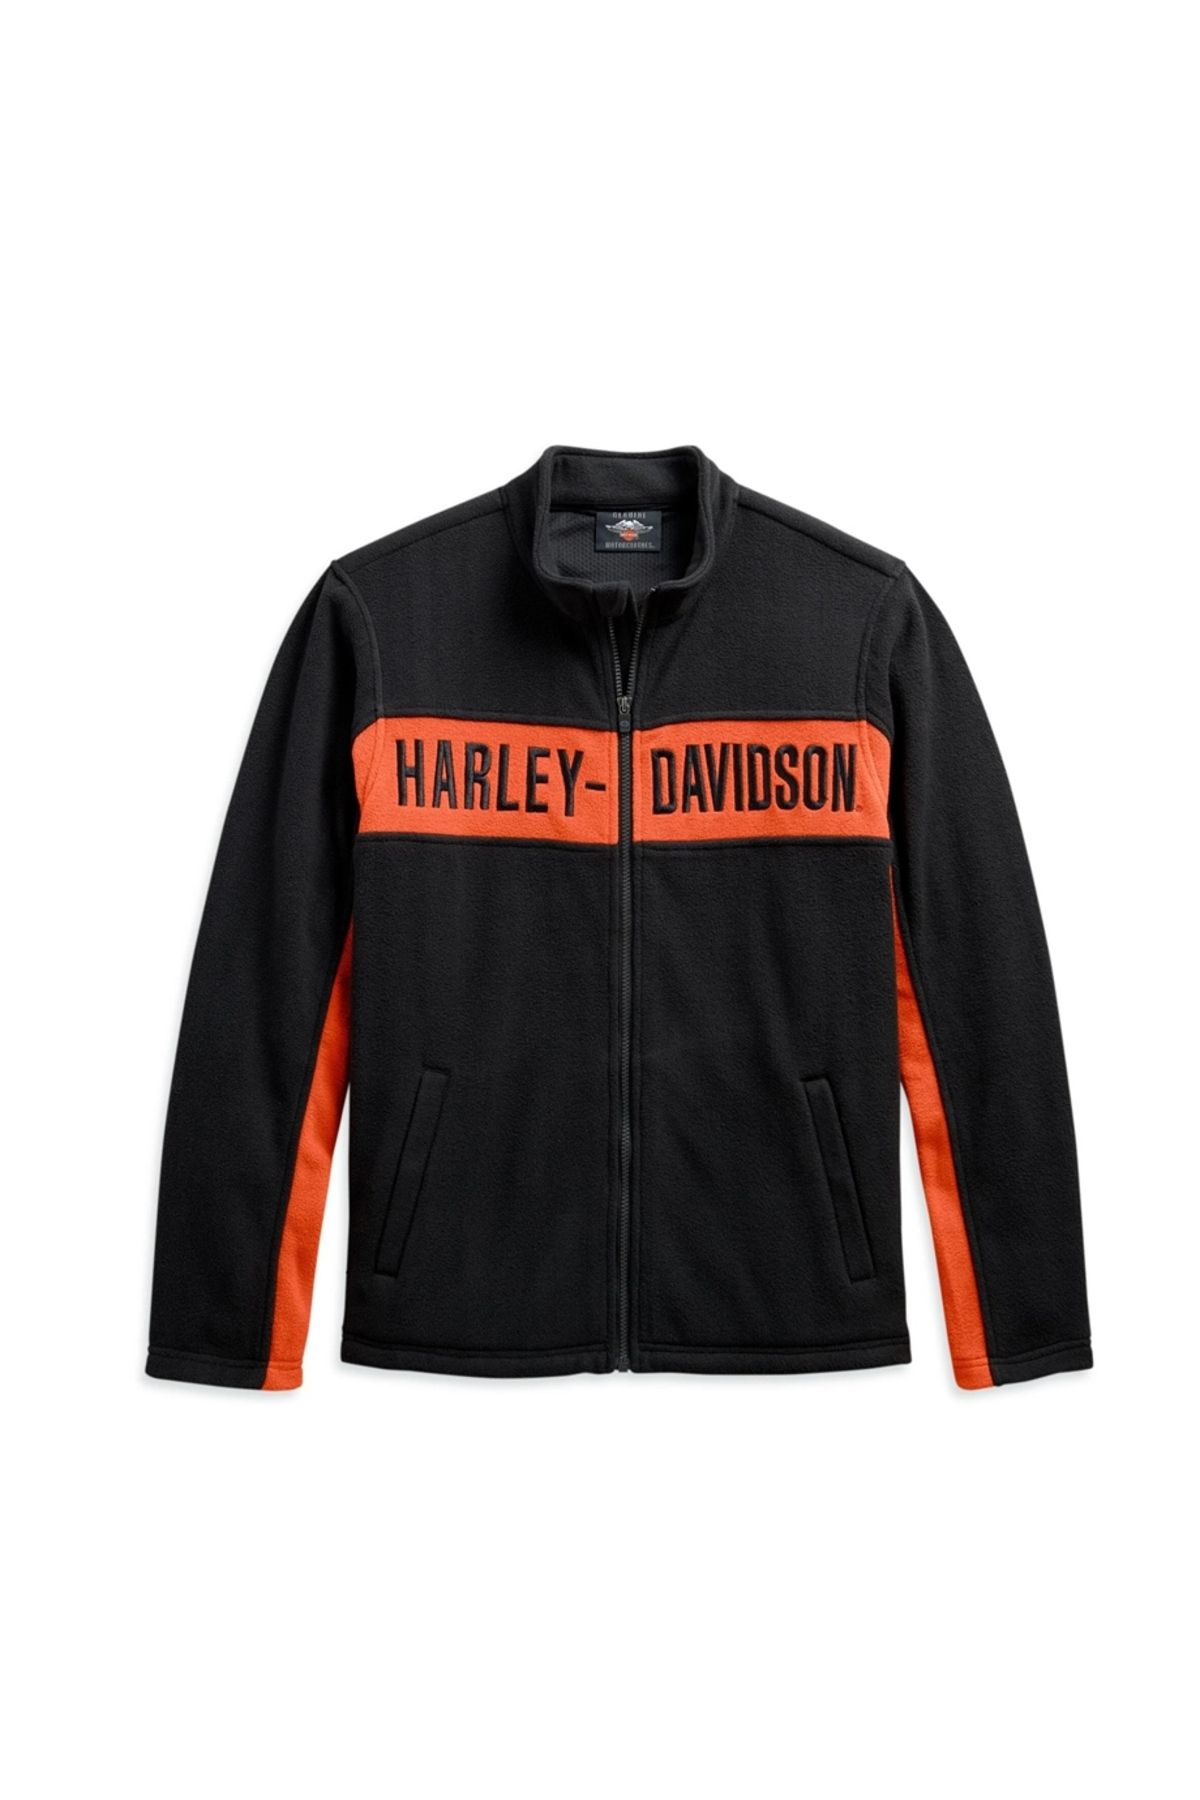 Harley Davidson Harley-davidson Men's Chest Stripe Activewear Jacket